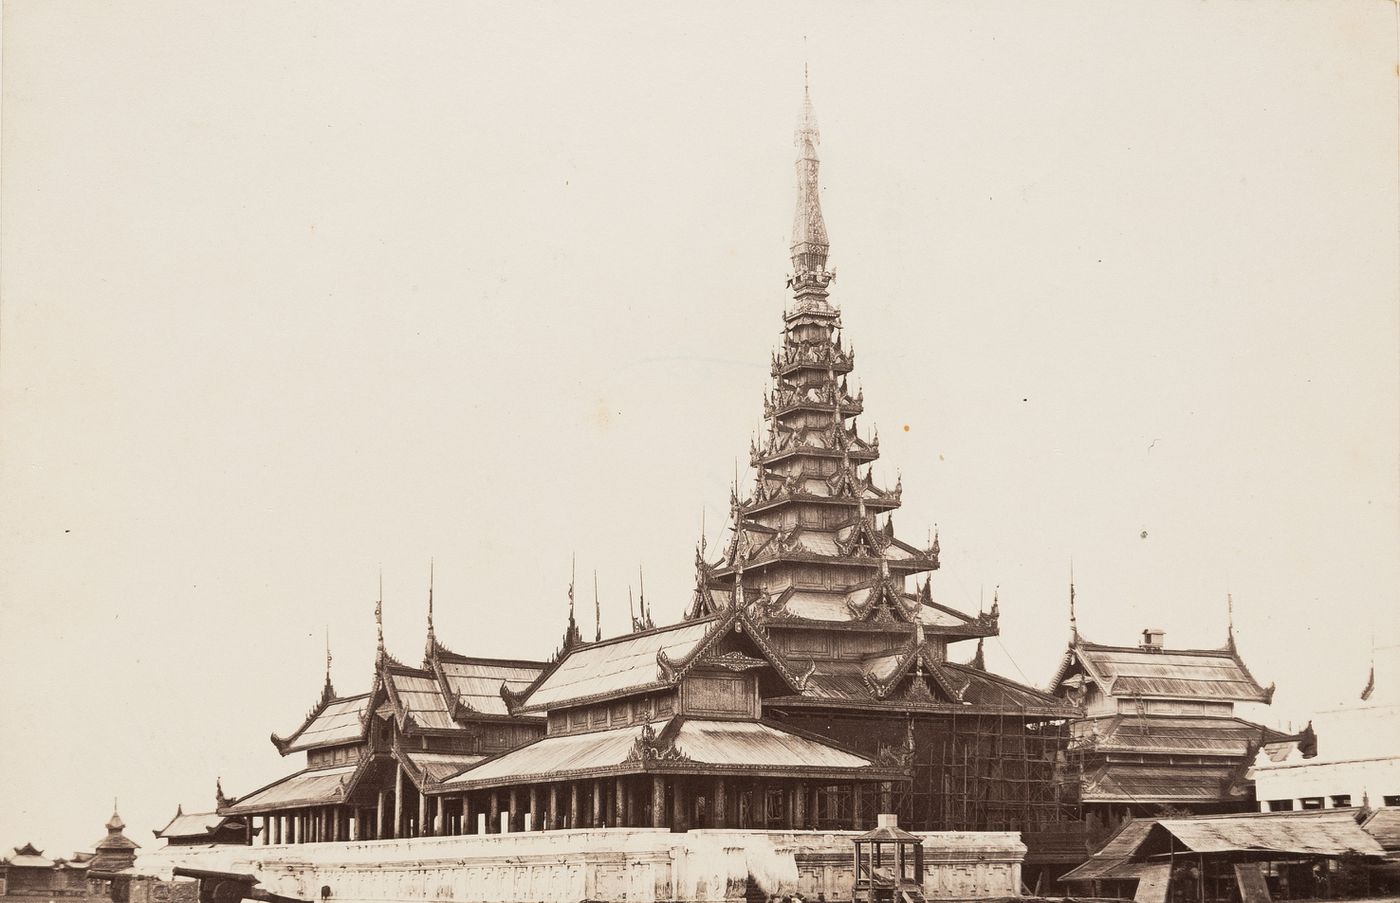 View of Mandalay Palace, Mandalay, Burma (now Myanmar)